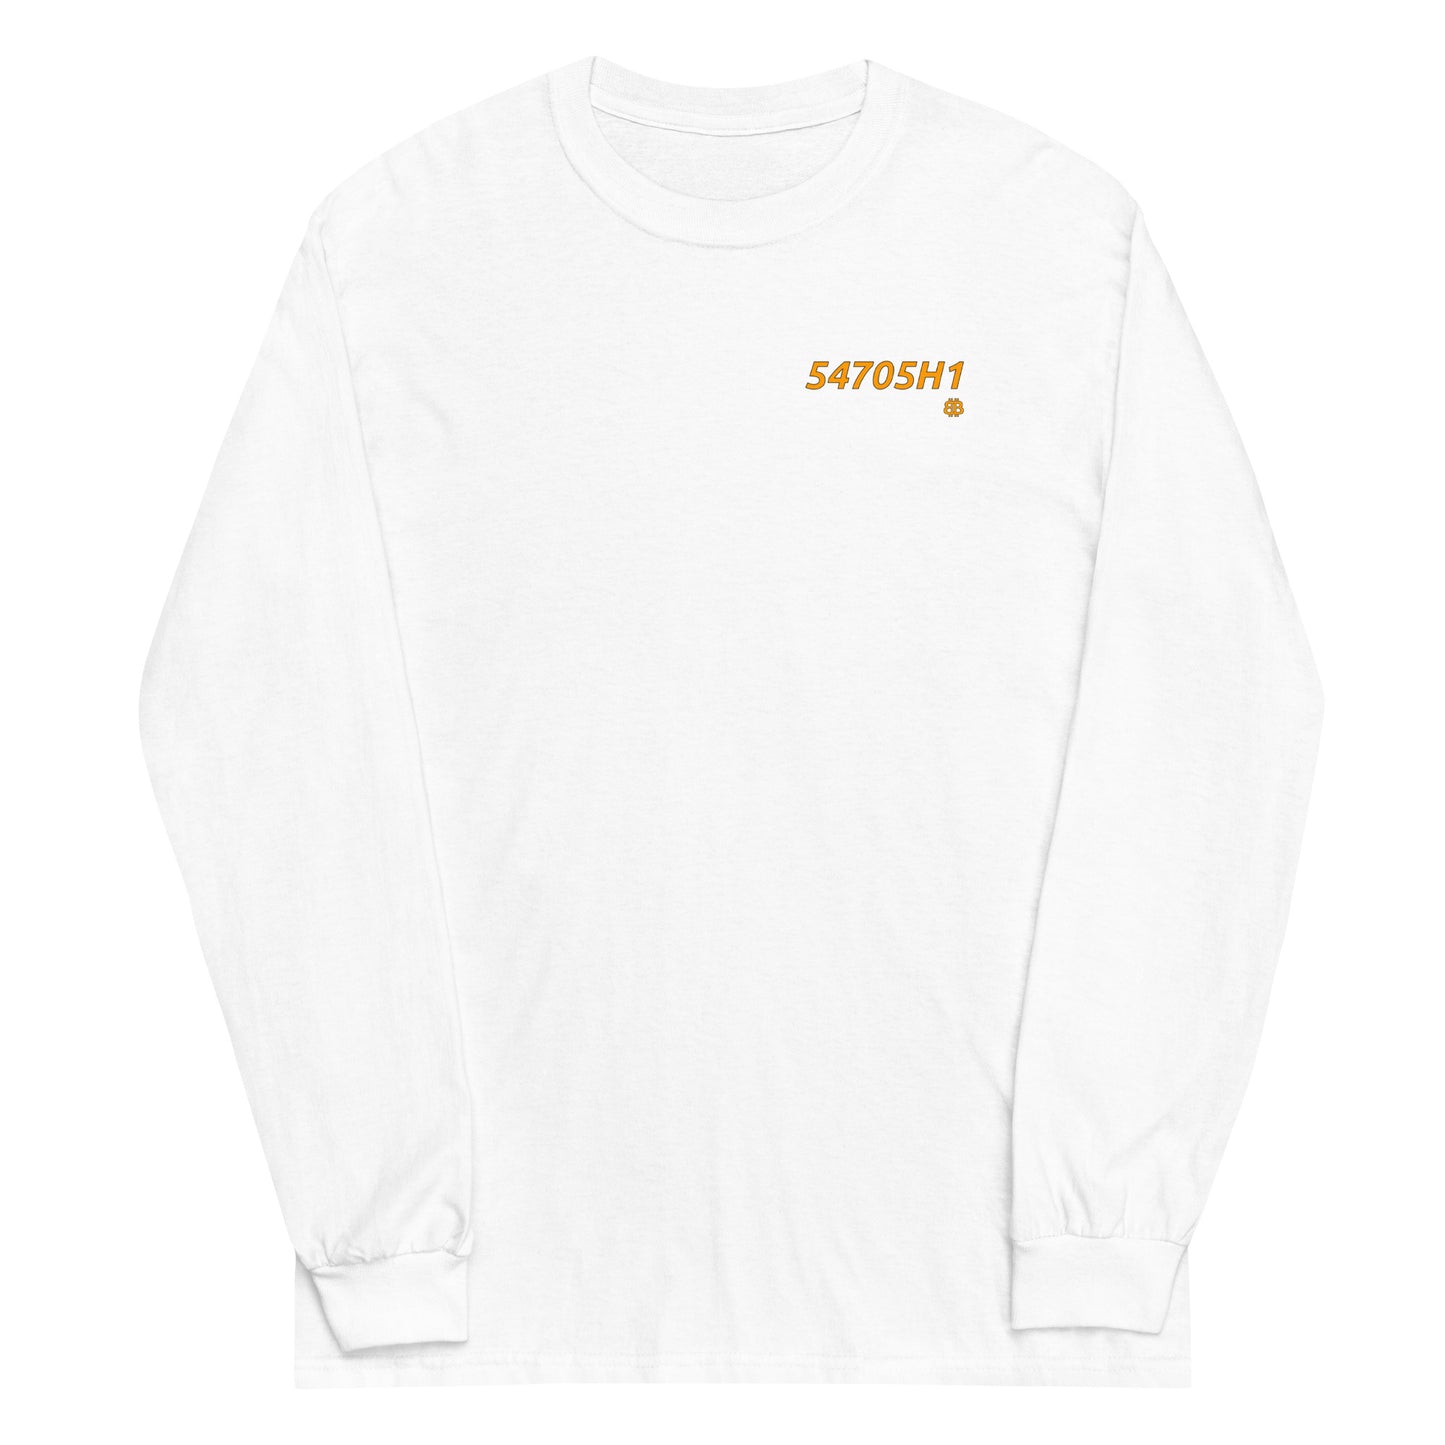 Unisex Long Sleeve Shirt "54705H1_sm"